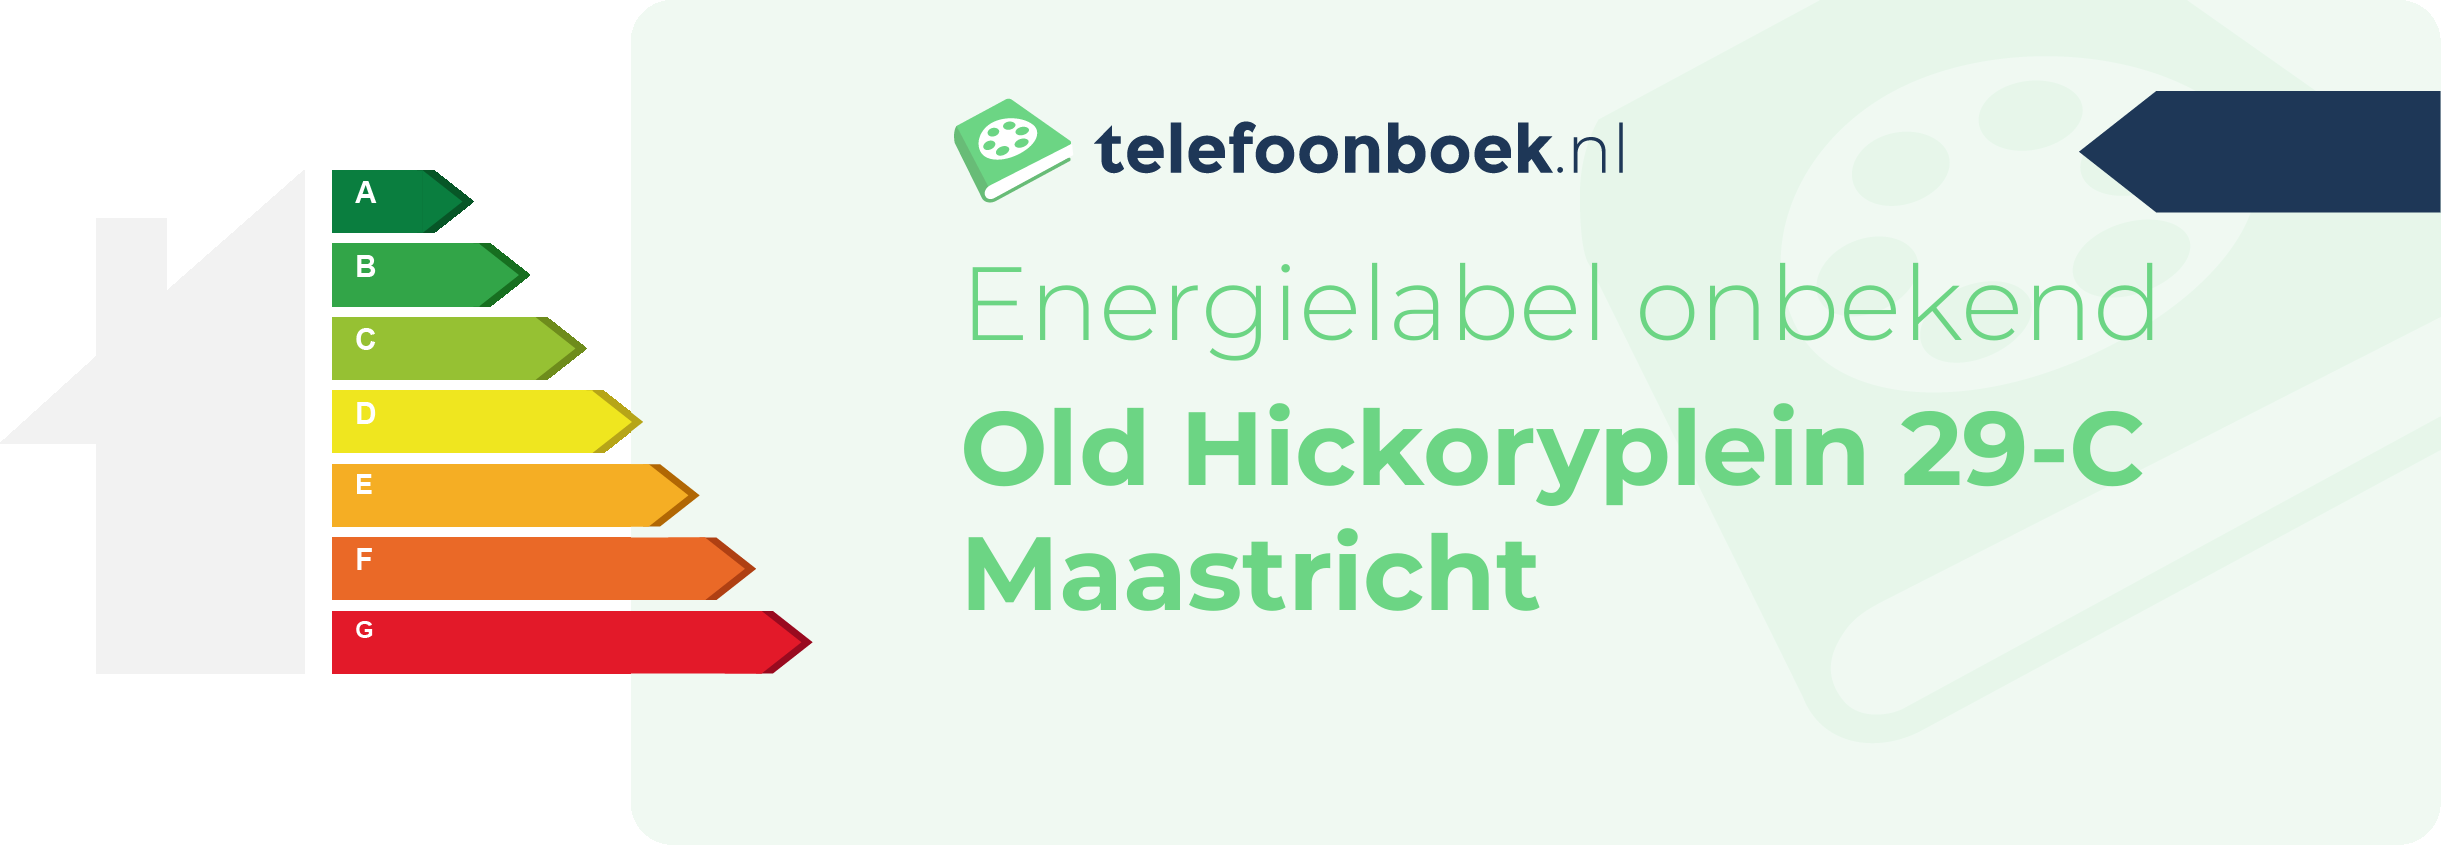 Energielabel Old Hickoryplein 29-C Maastricht